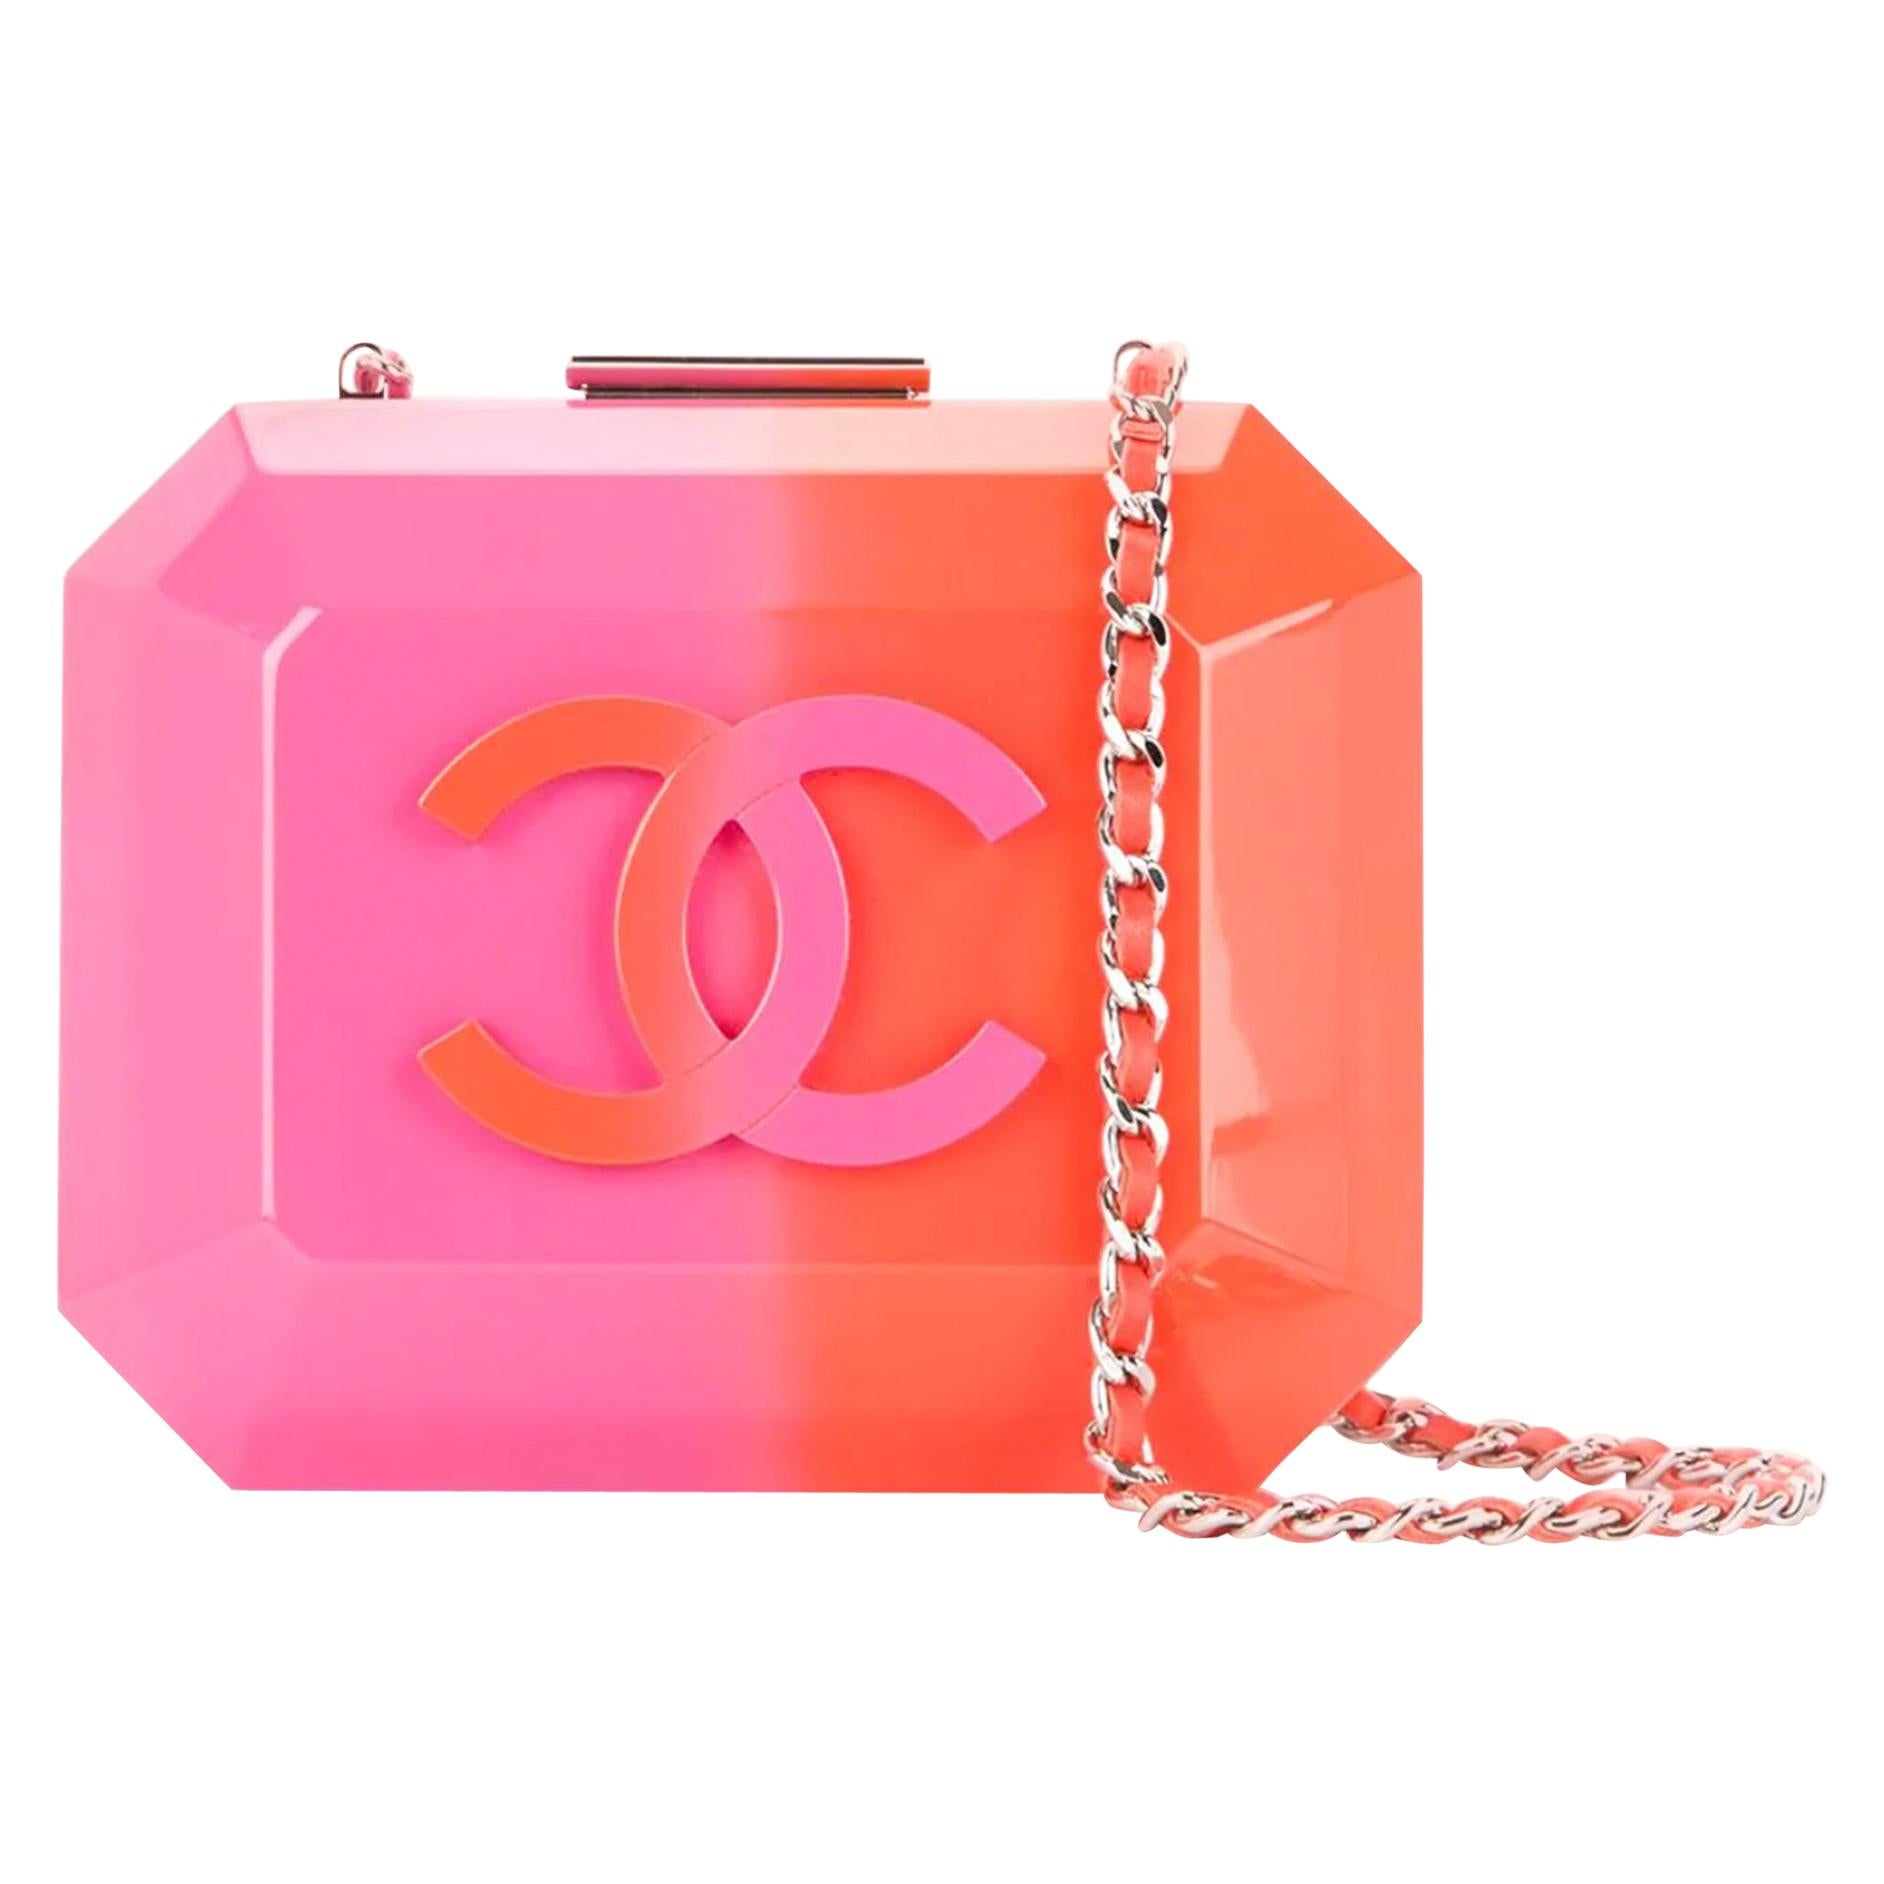 Chanel Rare Runway Pink & Orange Ombre Resin Plexiglass Brick Clutch Minaudière